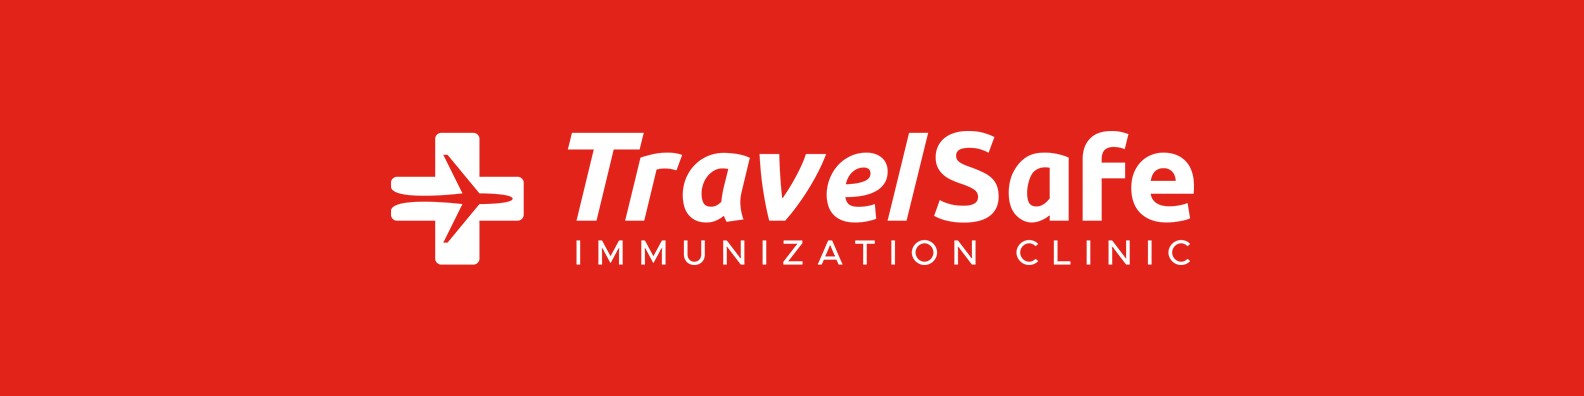 TravelSafe Immunization Clinic